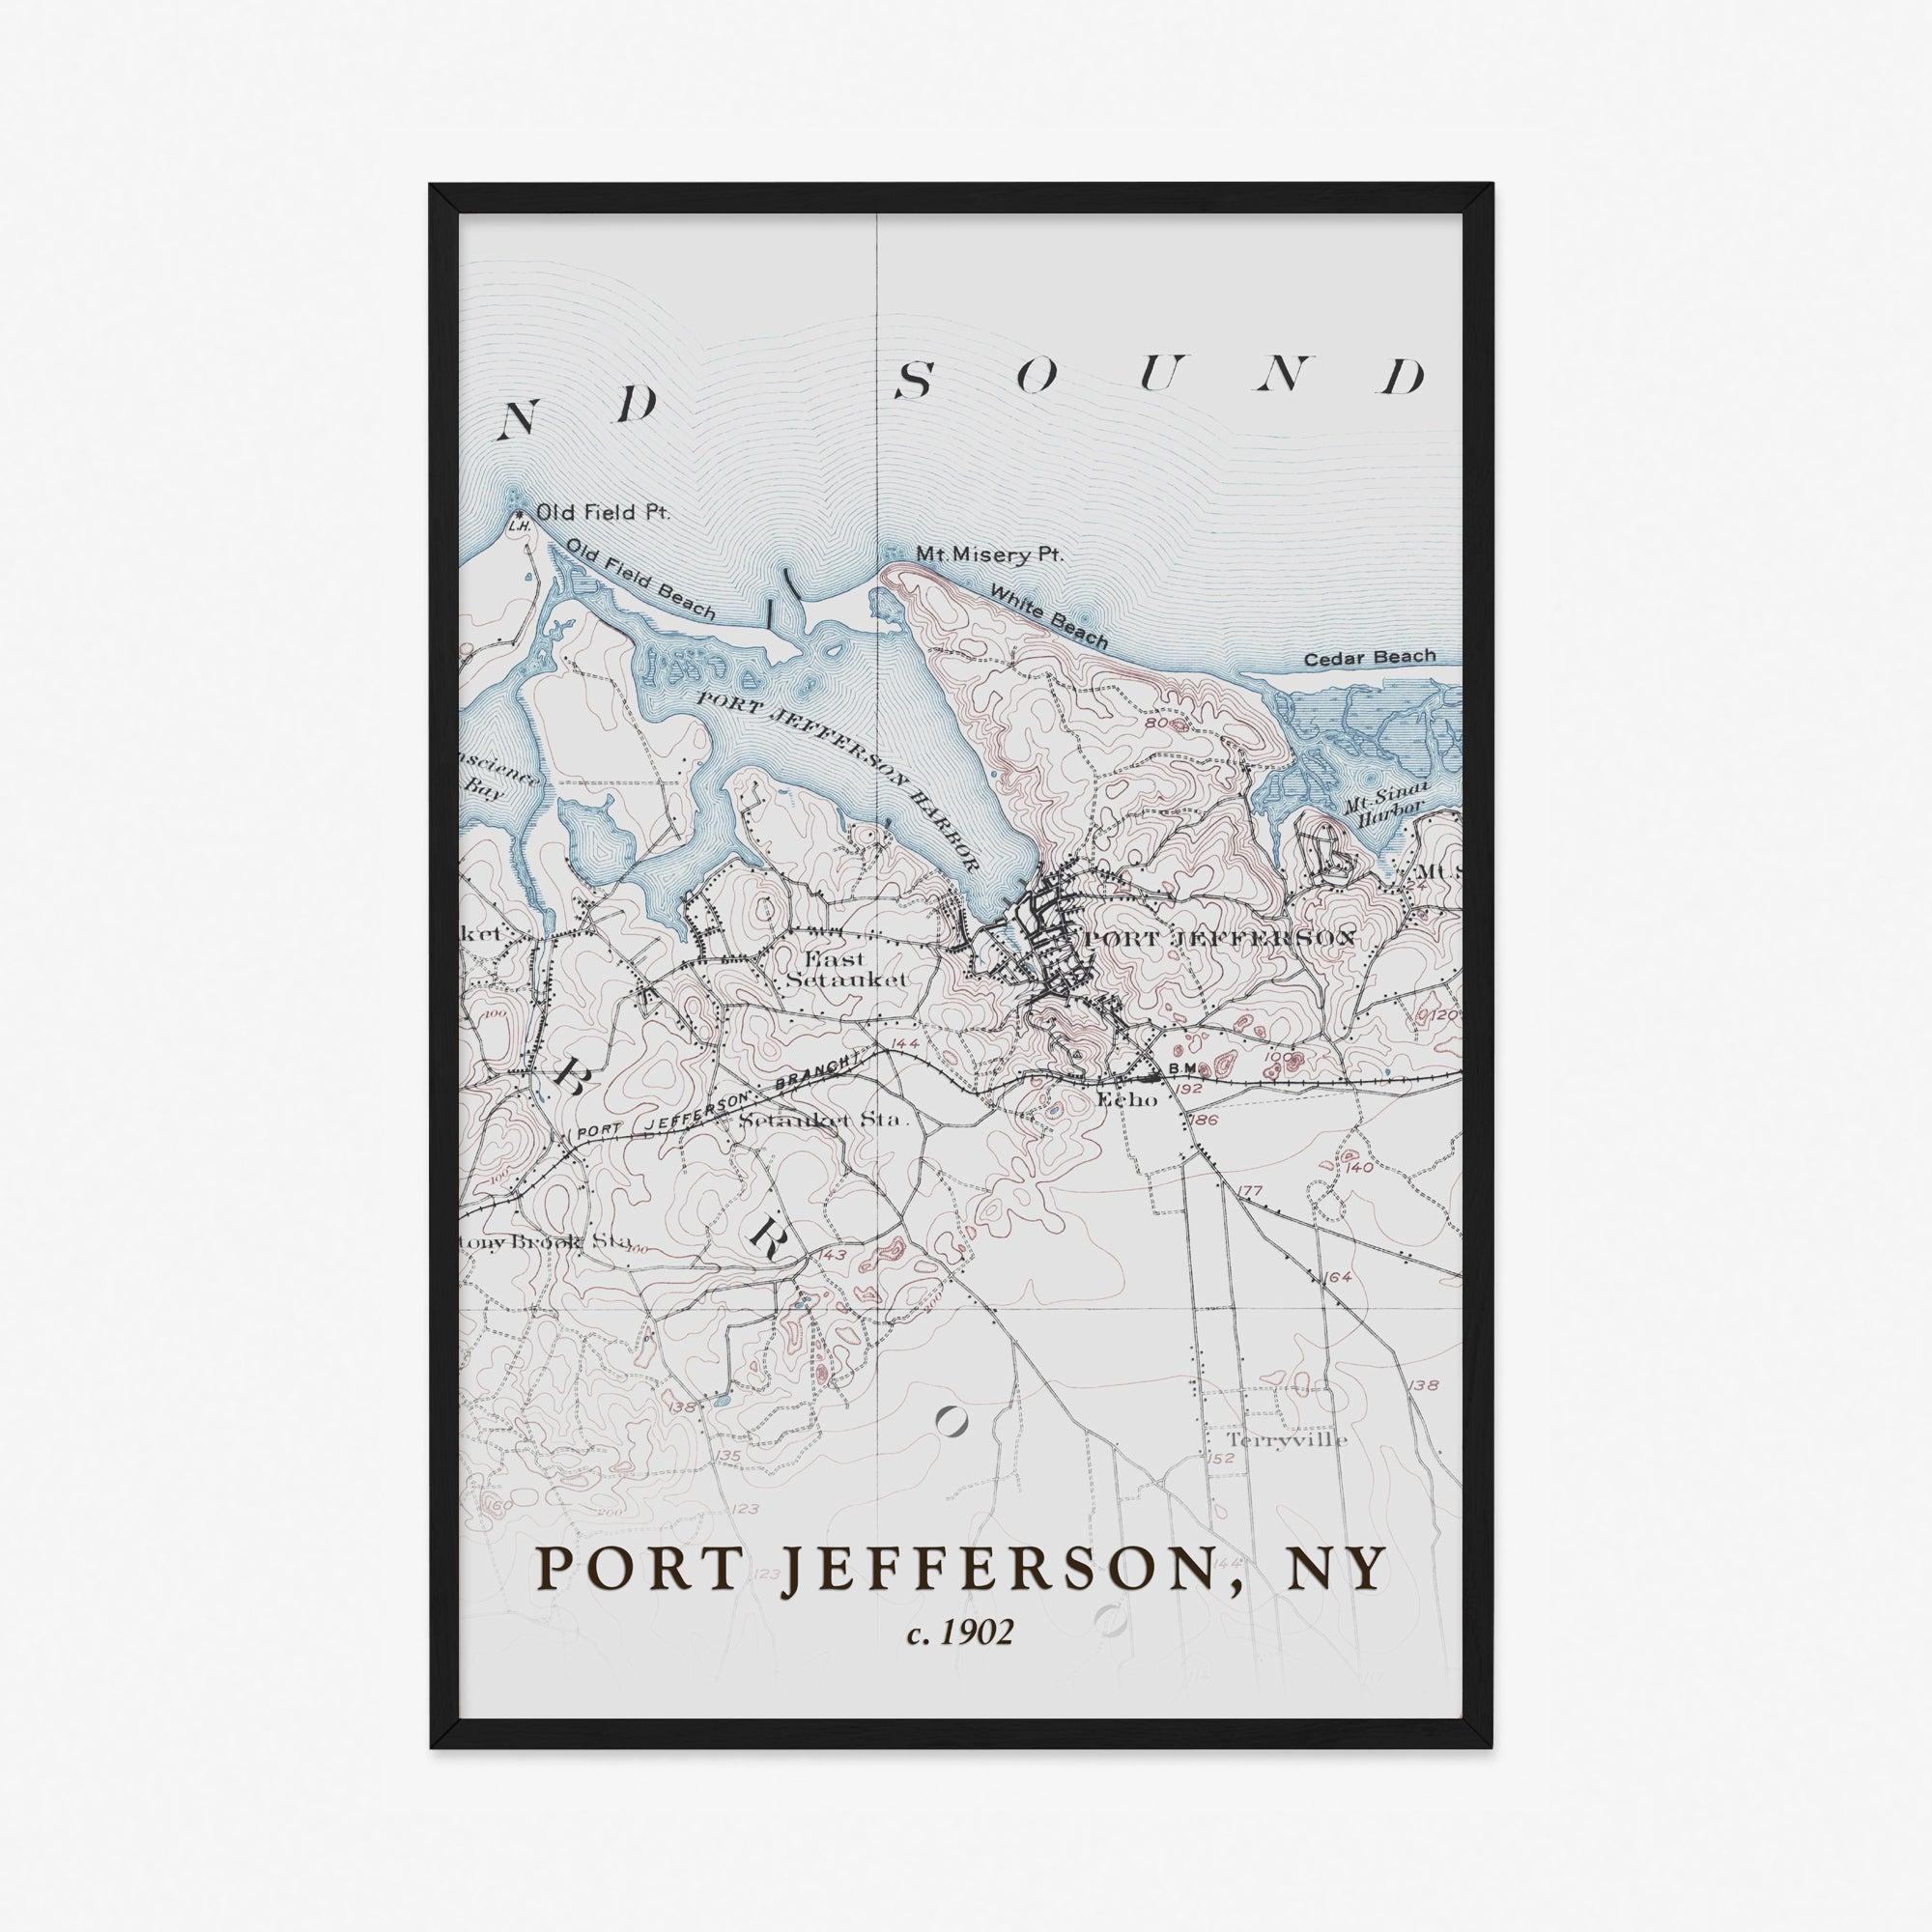 Port Jefferson, NY - 1902 Topographic Map